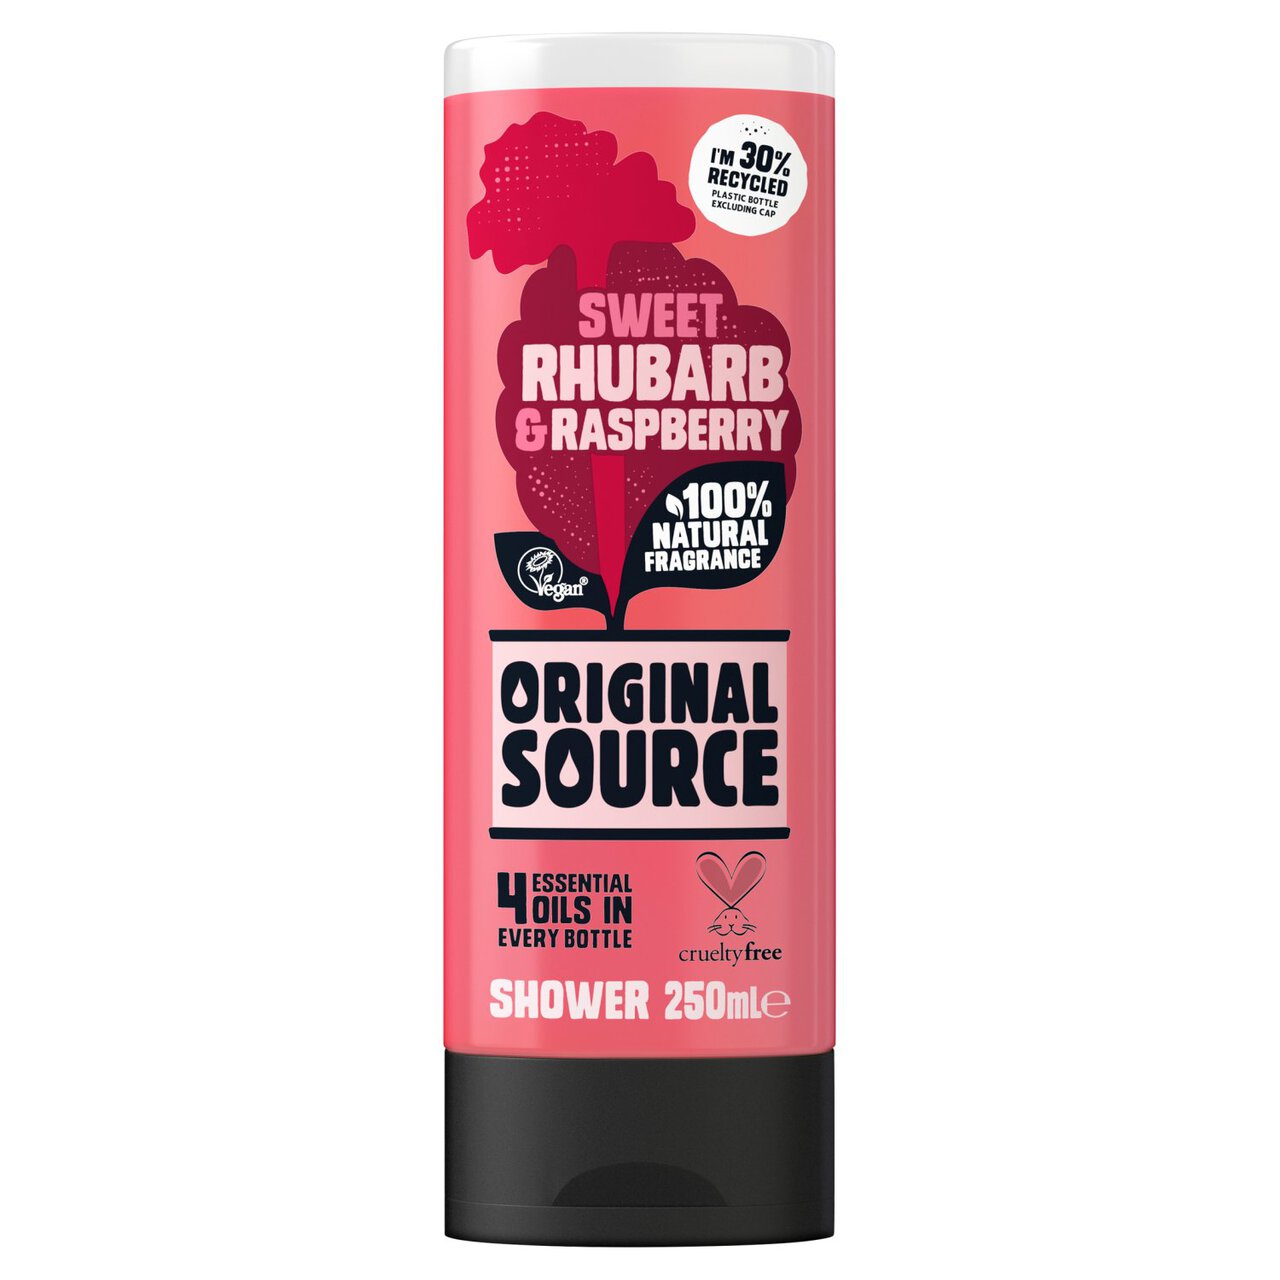 Original Source Rhubarb & Raspberry Shower Gel 250ml